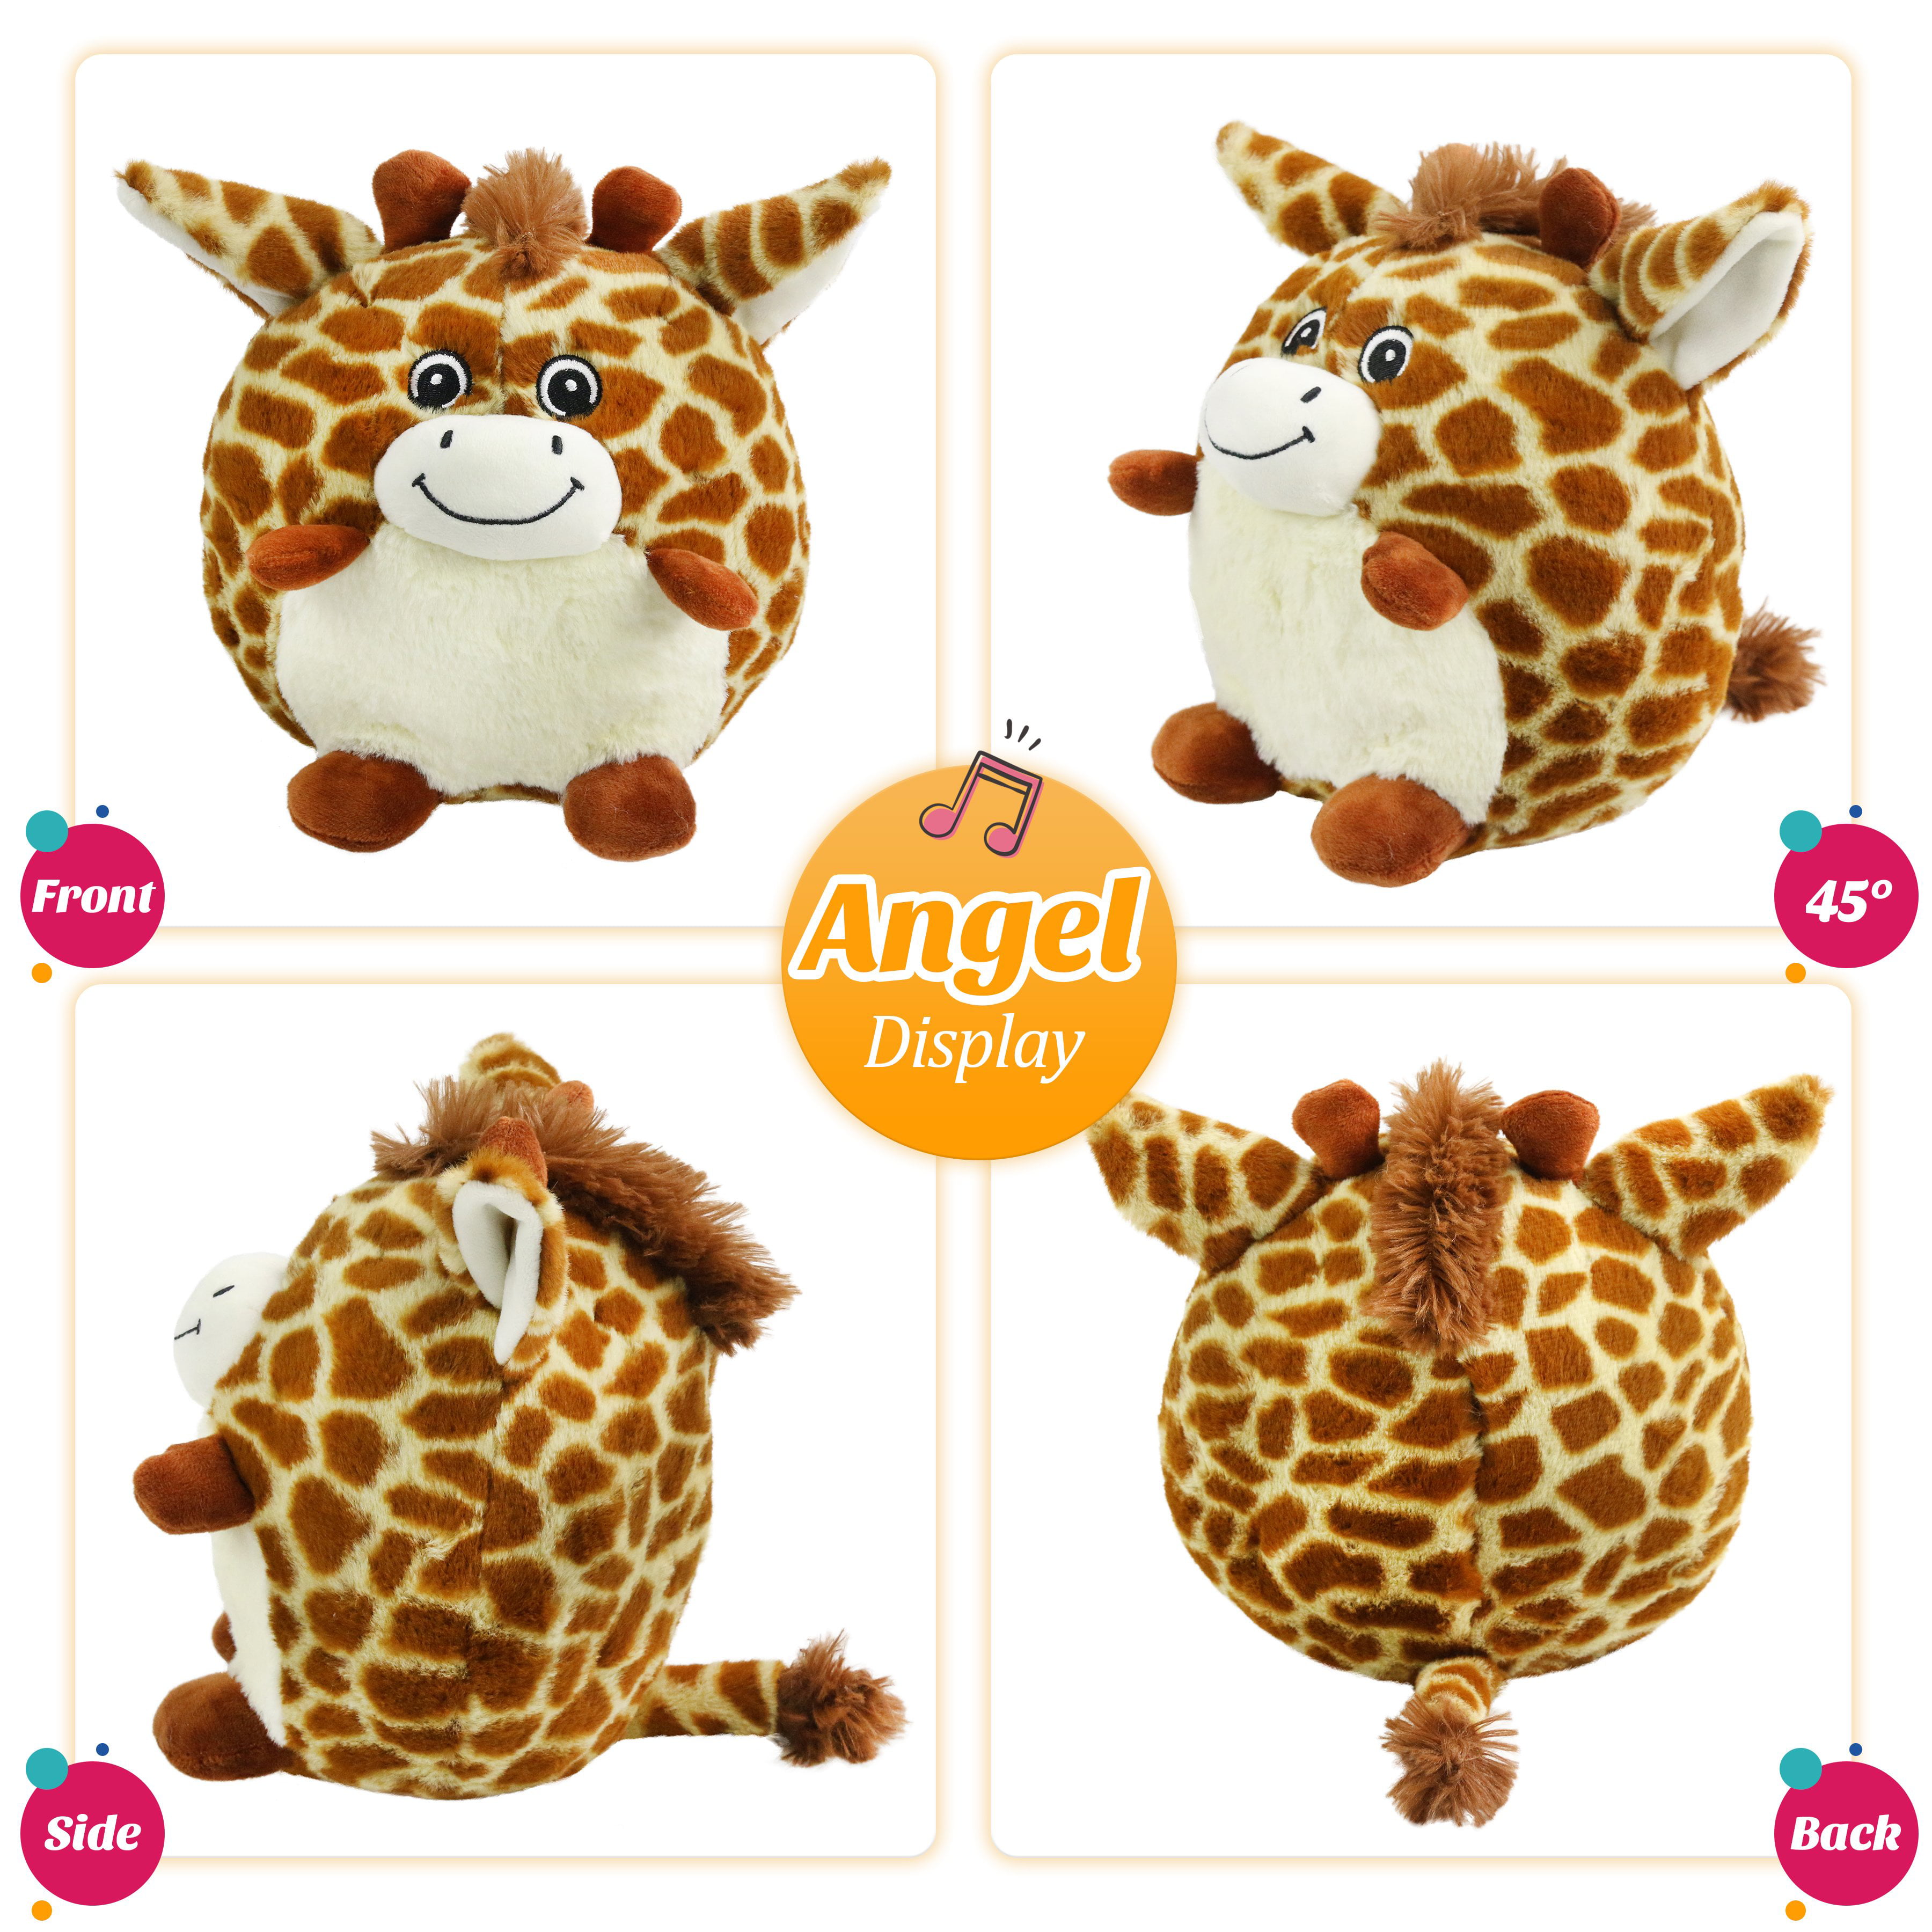 Small Snuggle Giraffe Toy 18cm – Love My Lot